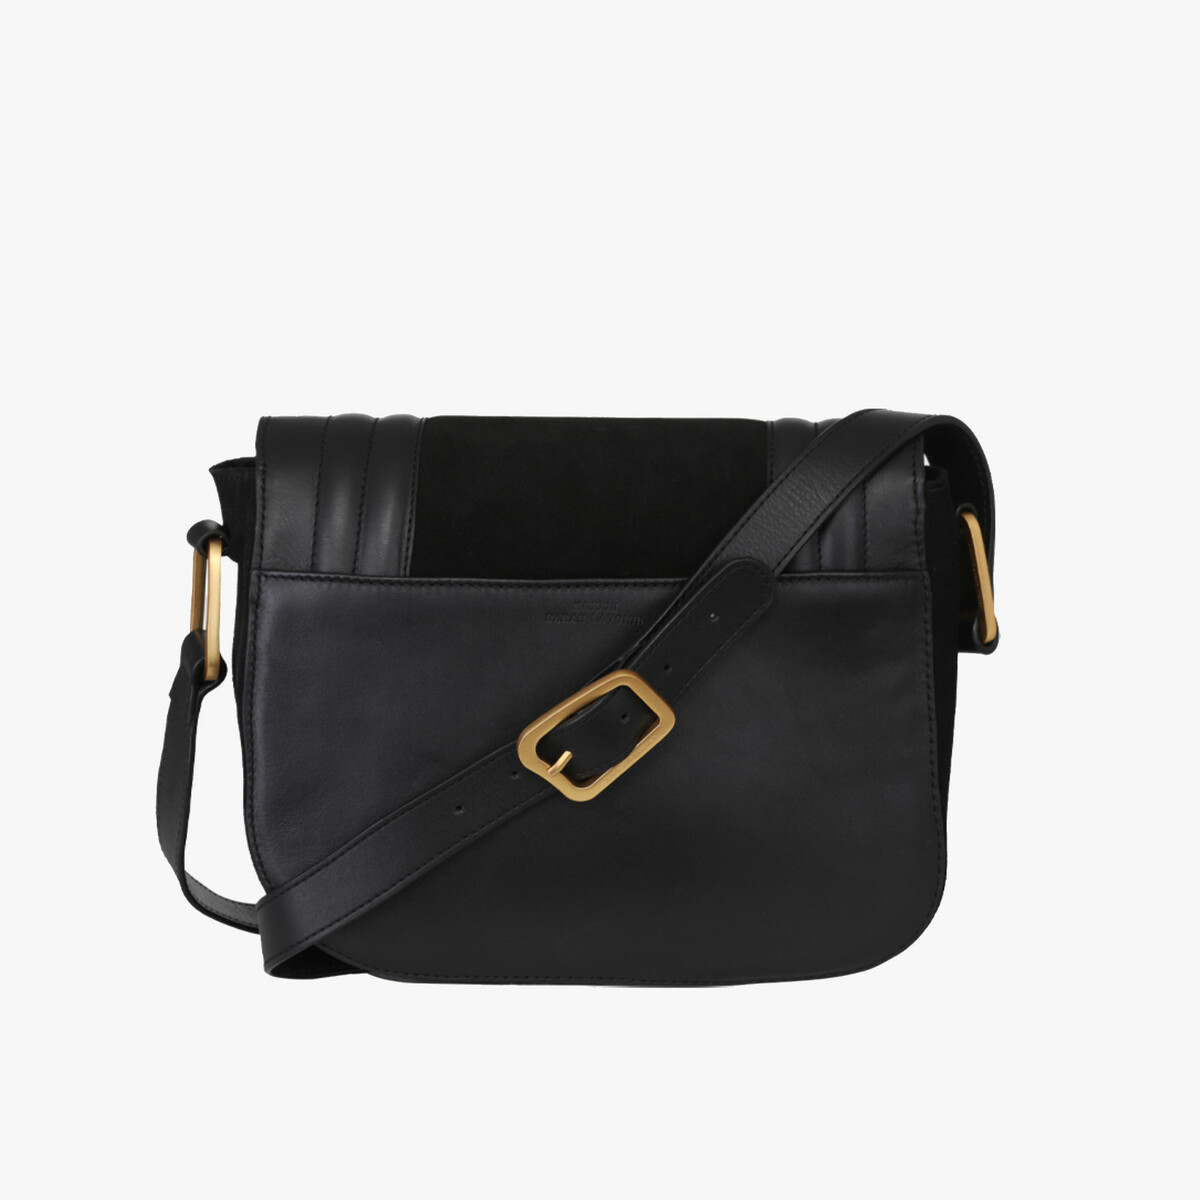 Shoulder bag Barth, Black Classic - W25.5 x H22 x D7 cm - 100% leather  - image 2